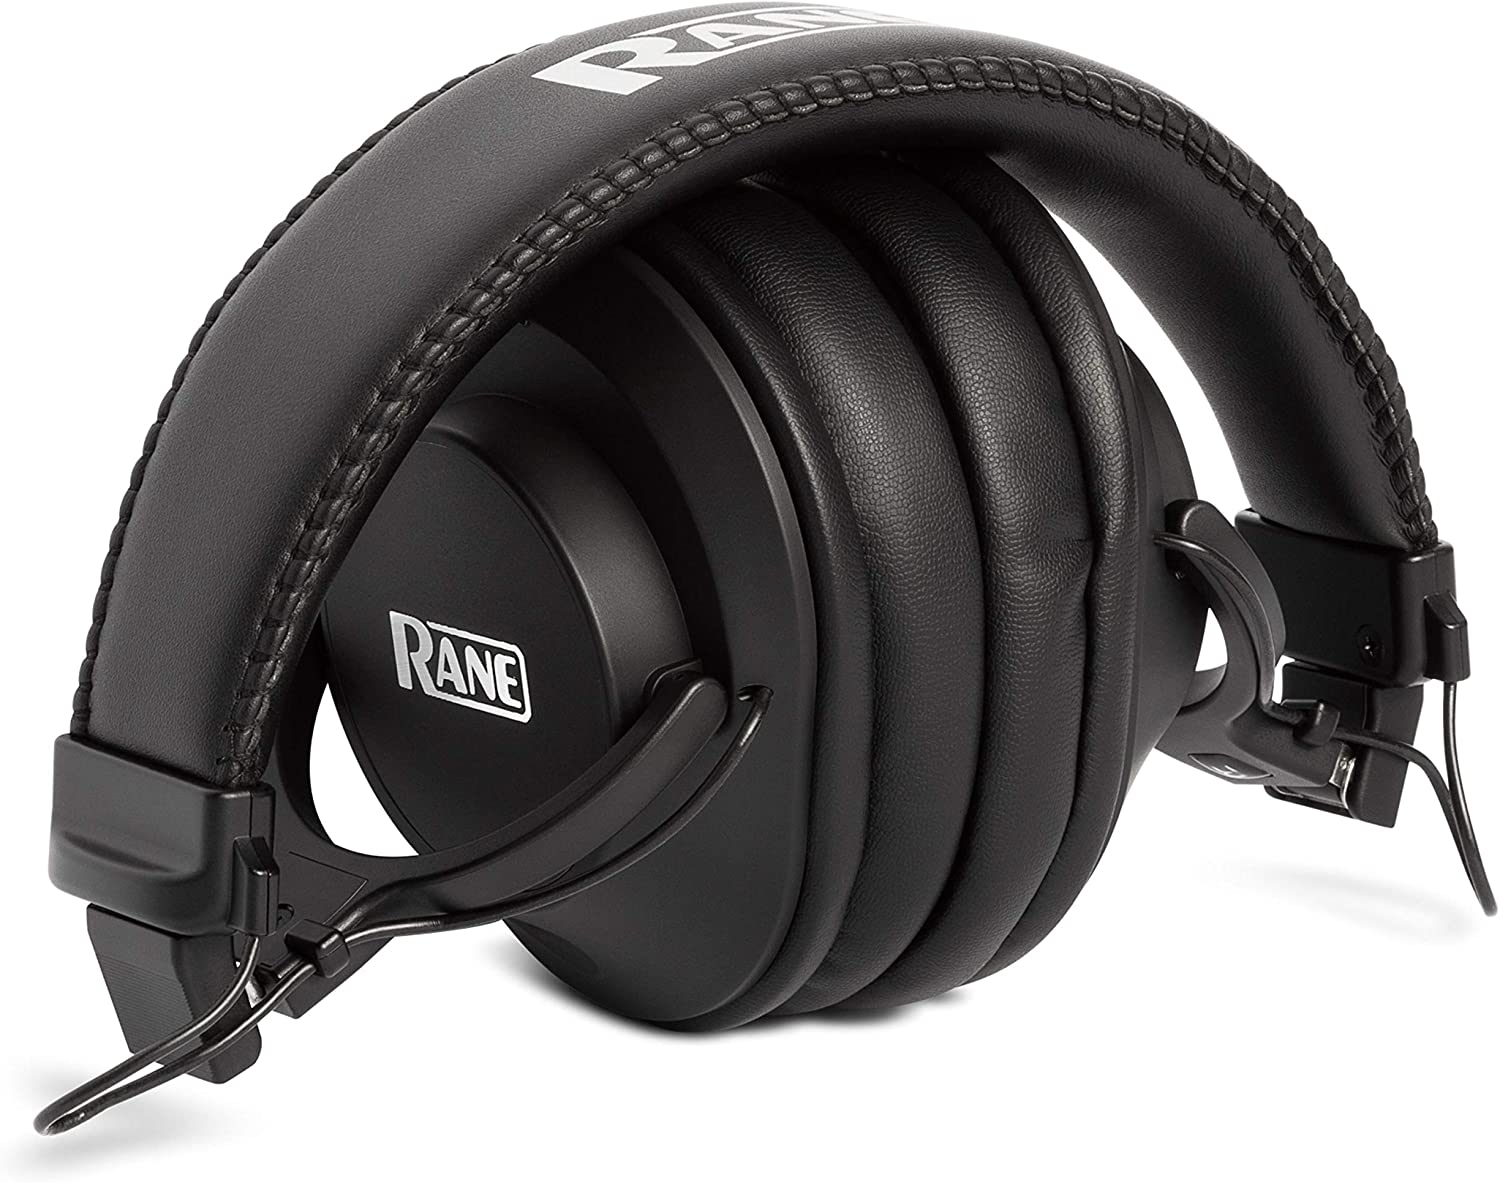 Rane RH-50 High-Fidelity Over-Ear Headphones 1/4” Adapter Included